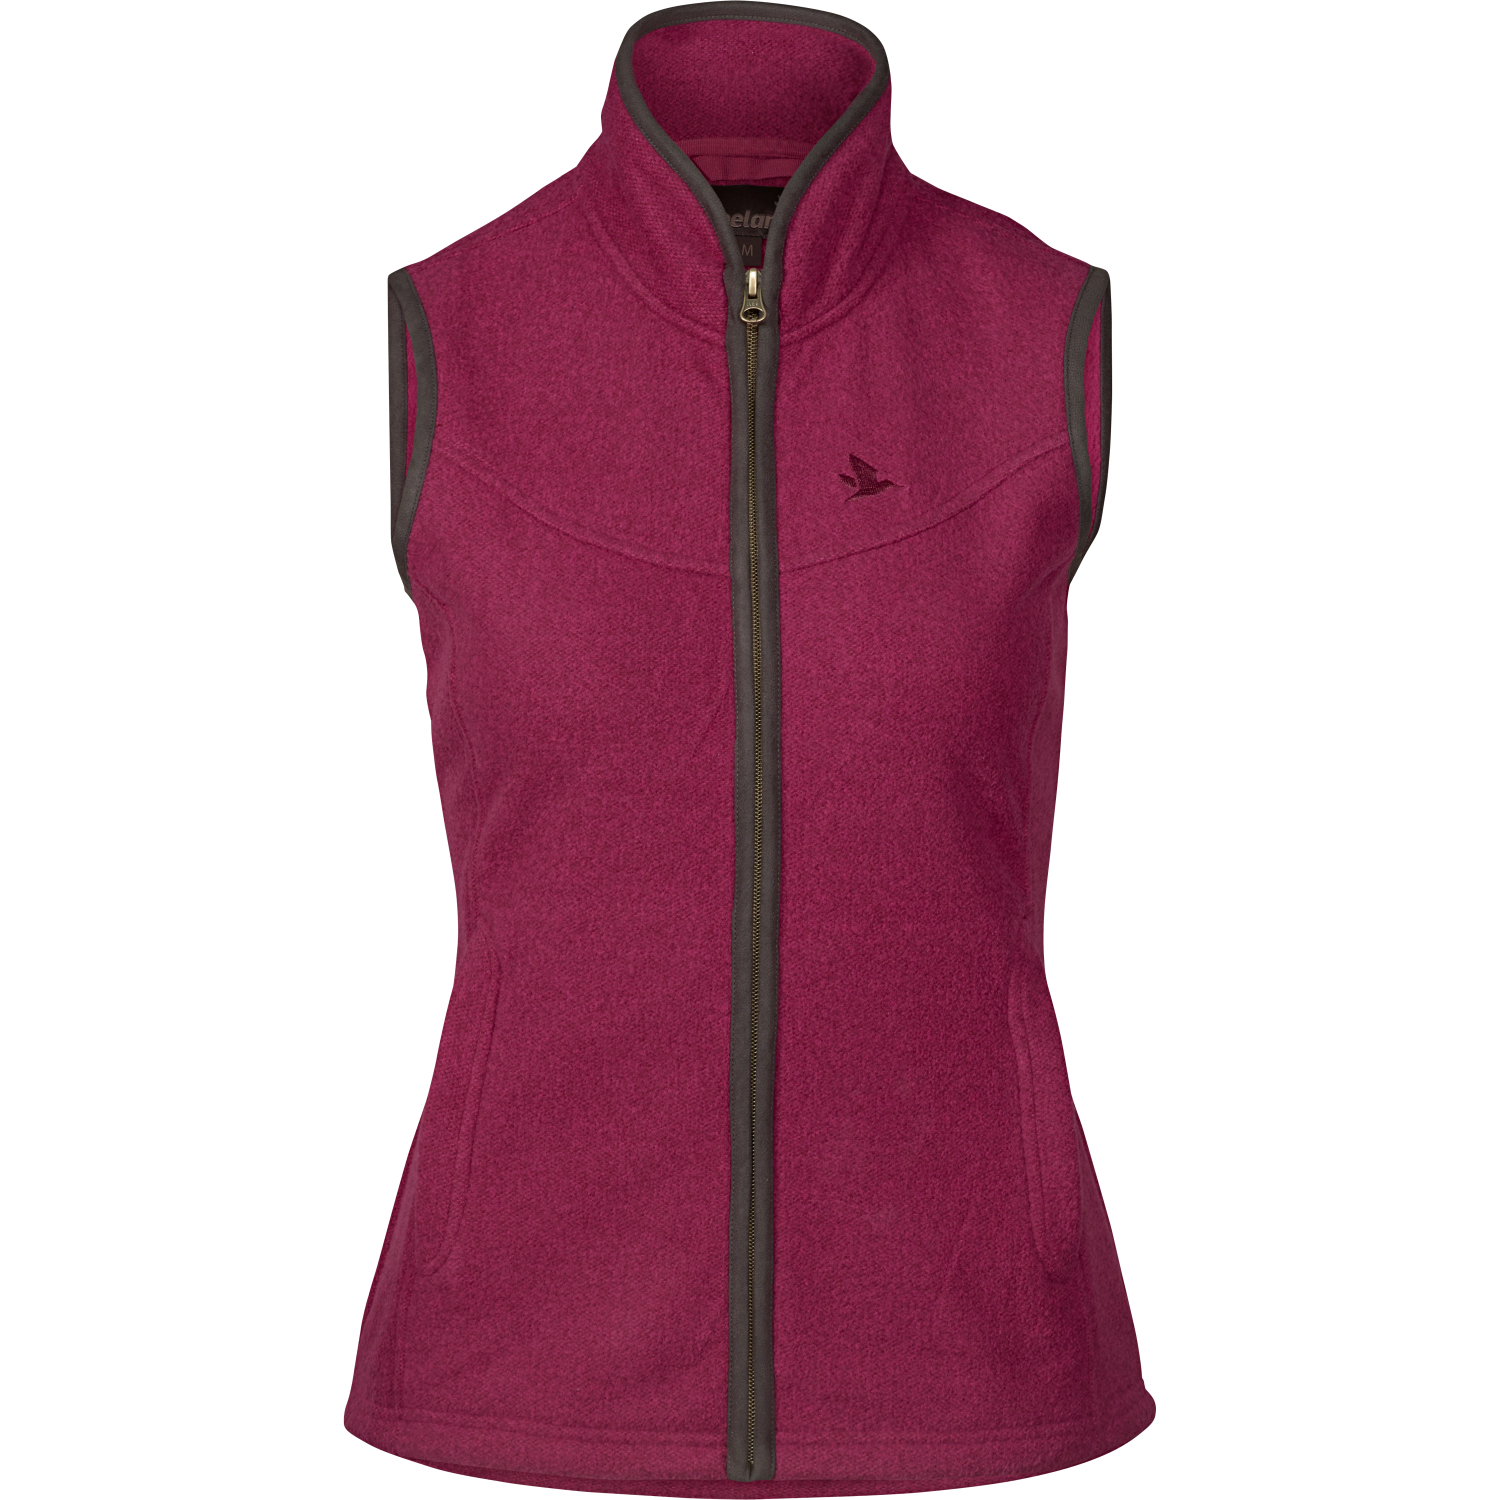 https://images.askari-sport.com/en/product/1/large/seeland-womens-fleece-vest-woodcock-red.jpg